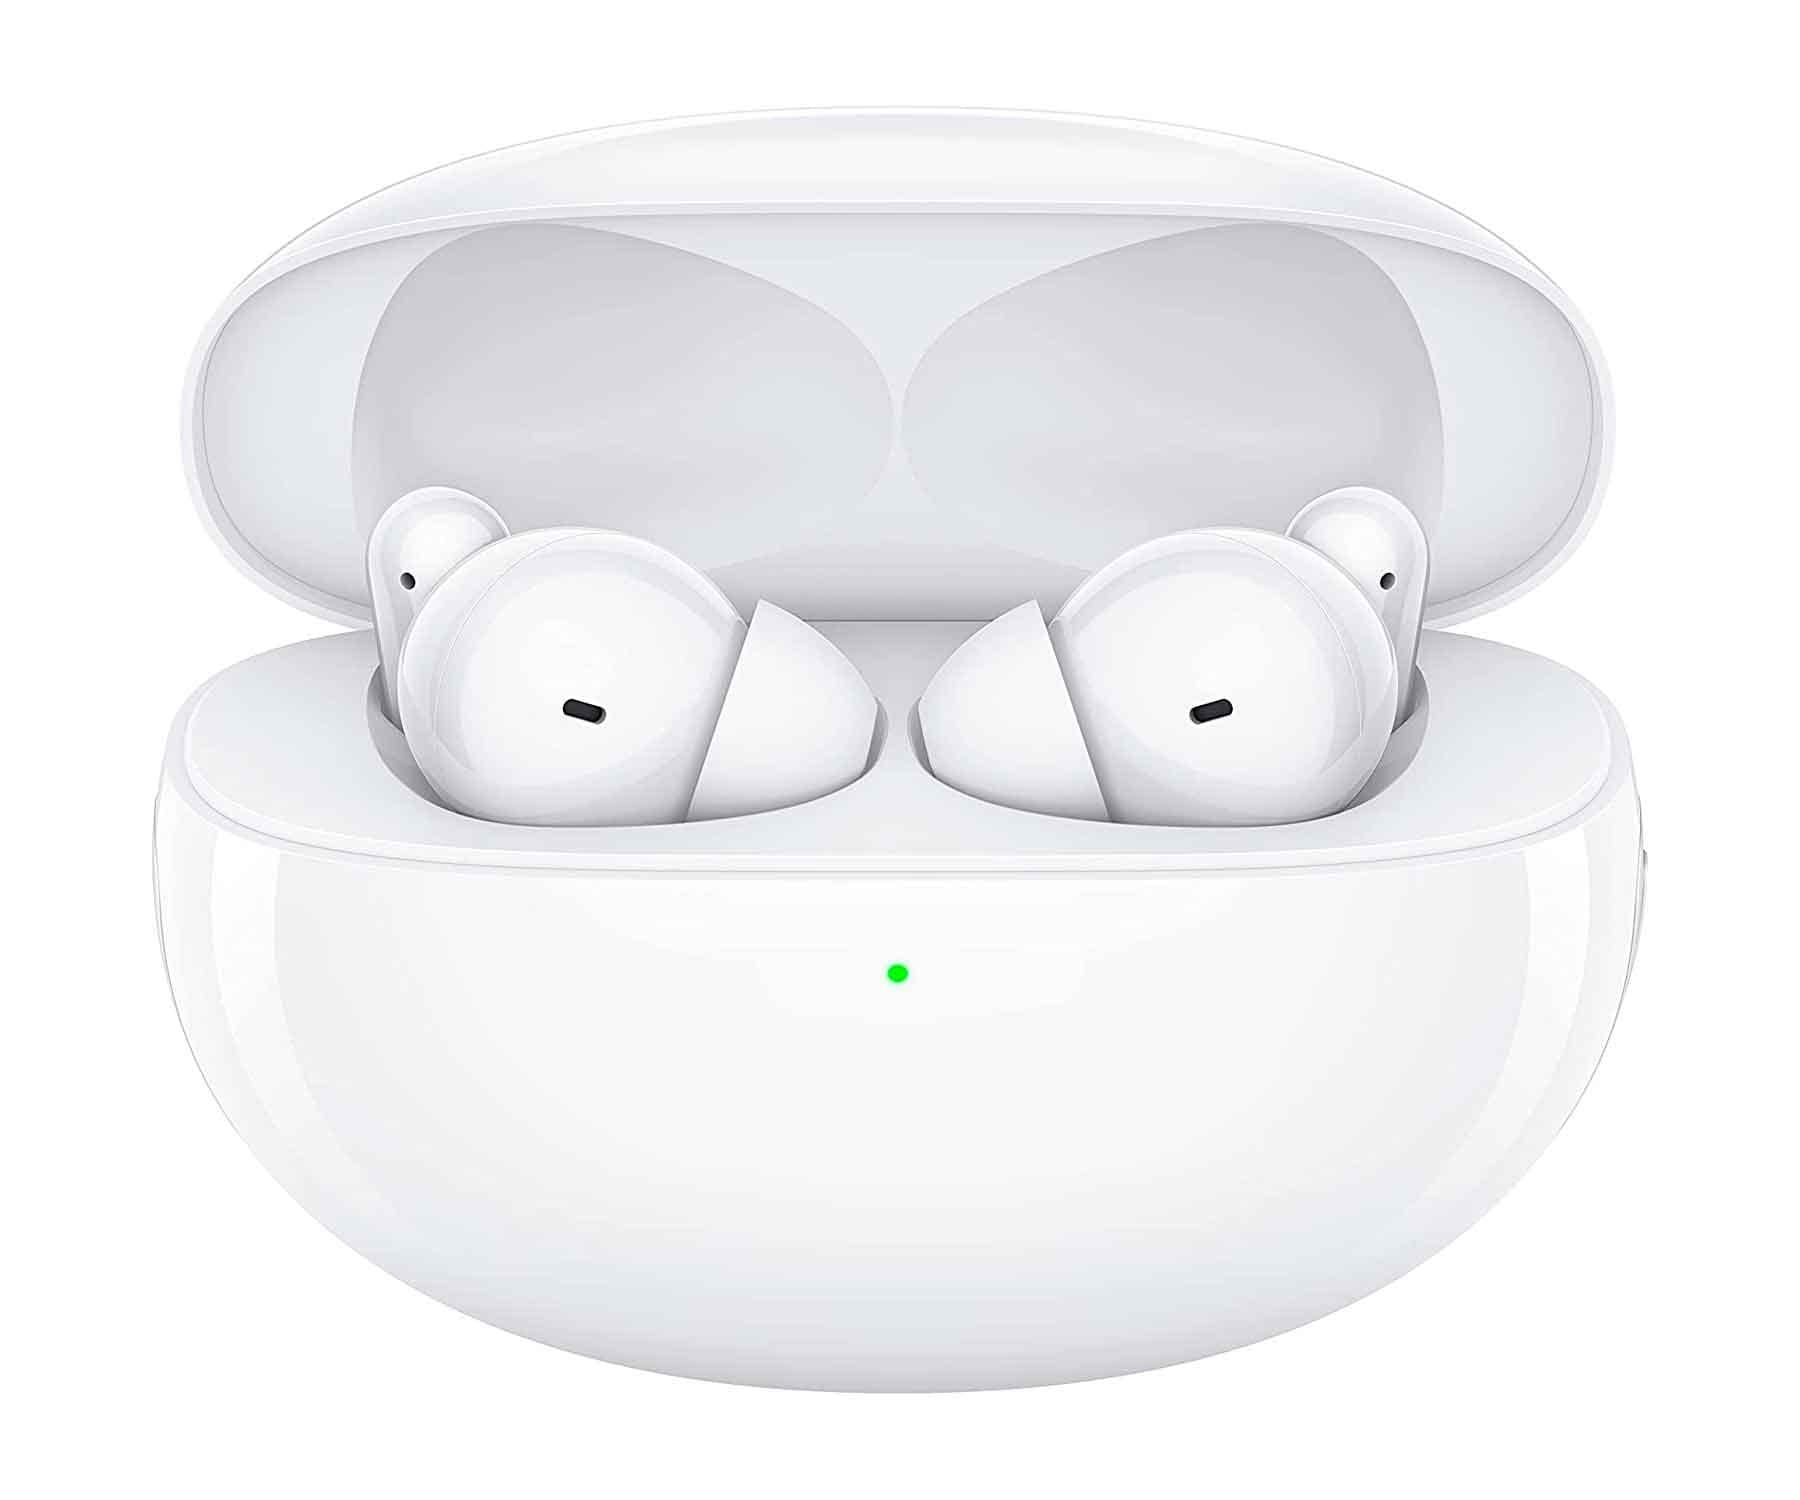 OPPO Enco Free2 White / Auriculares InEar True Wireless